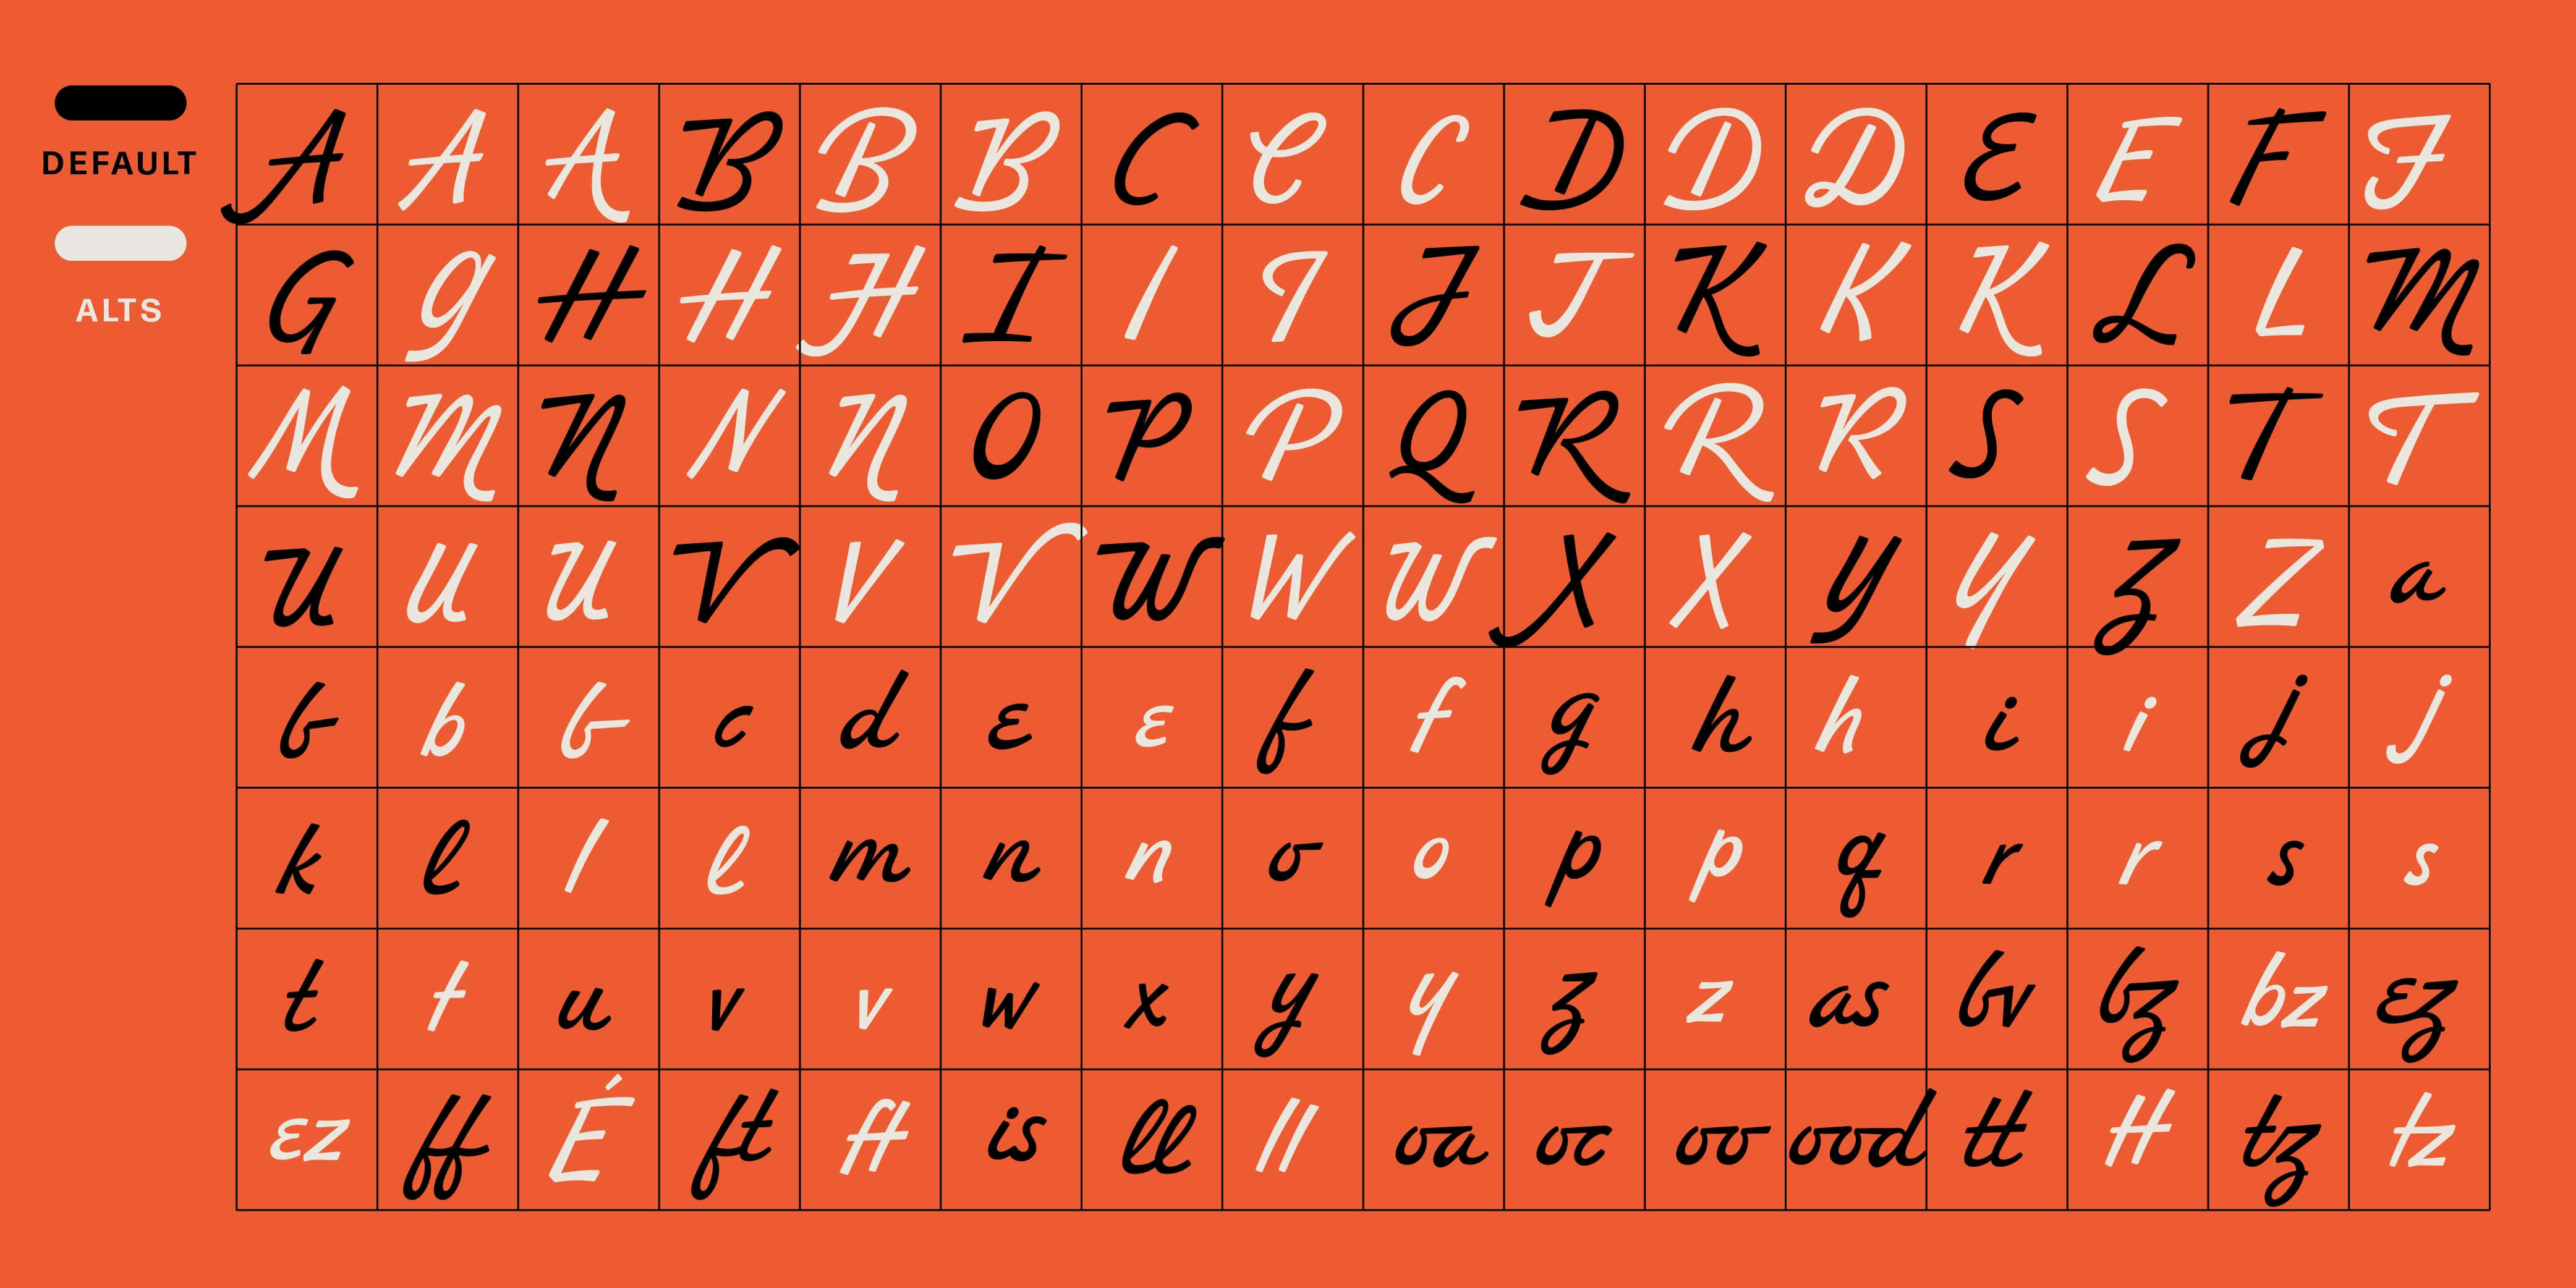 Redondo Ave Script Font alphabet